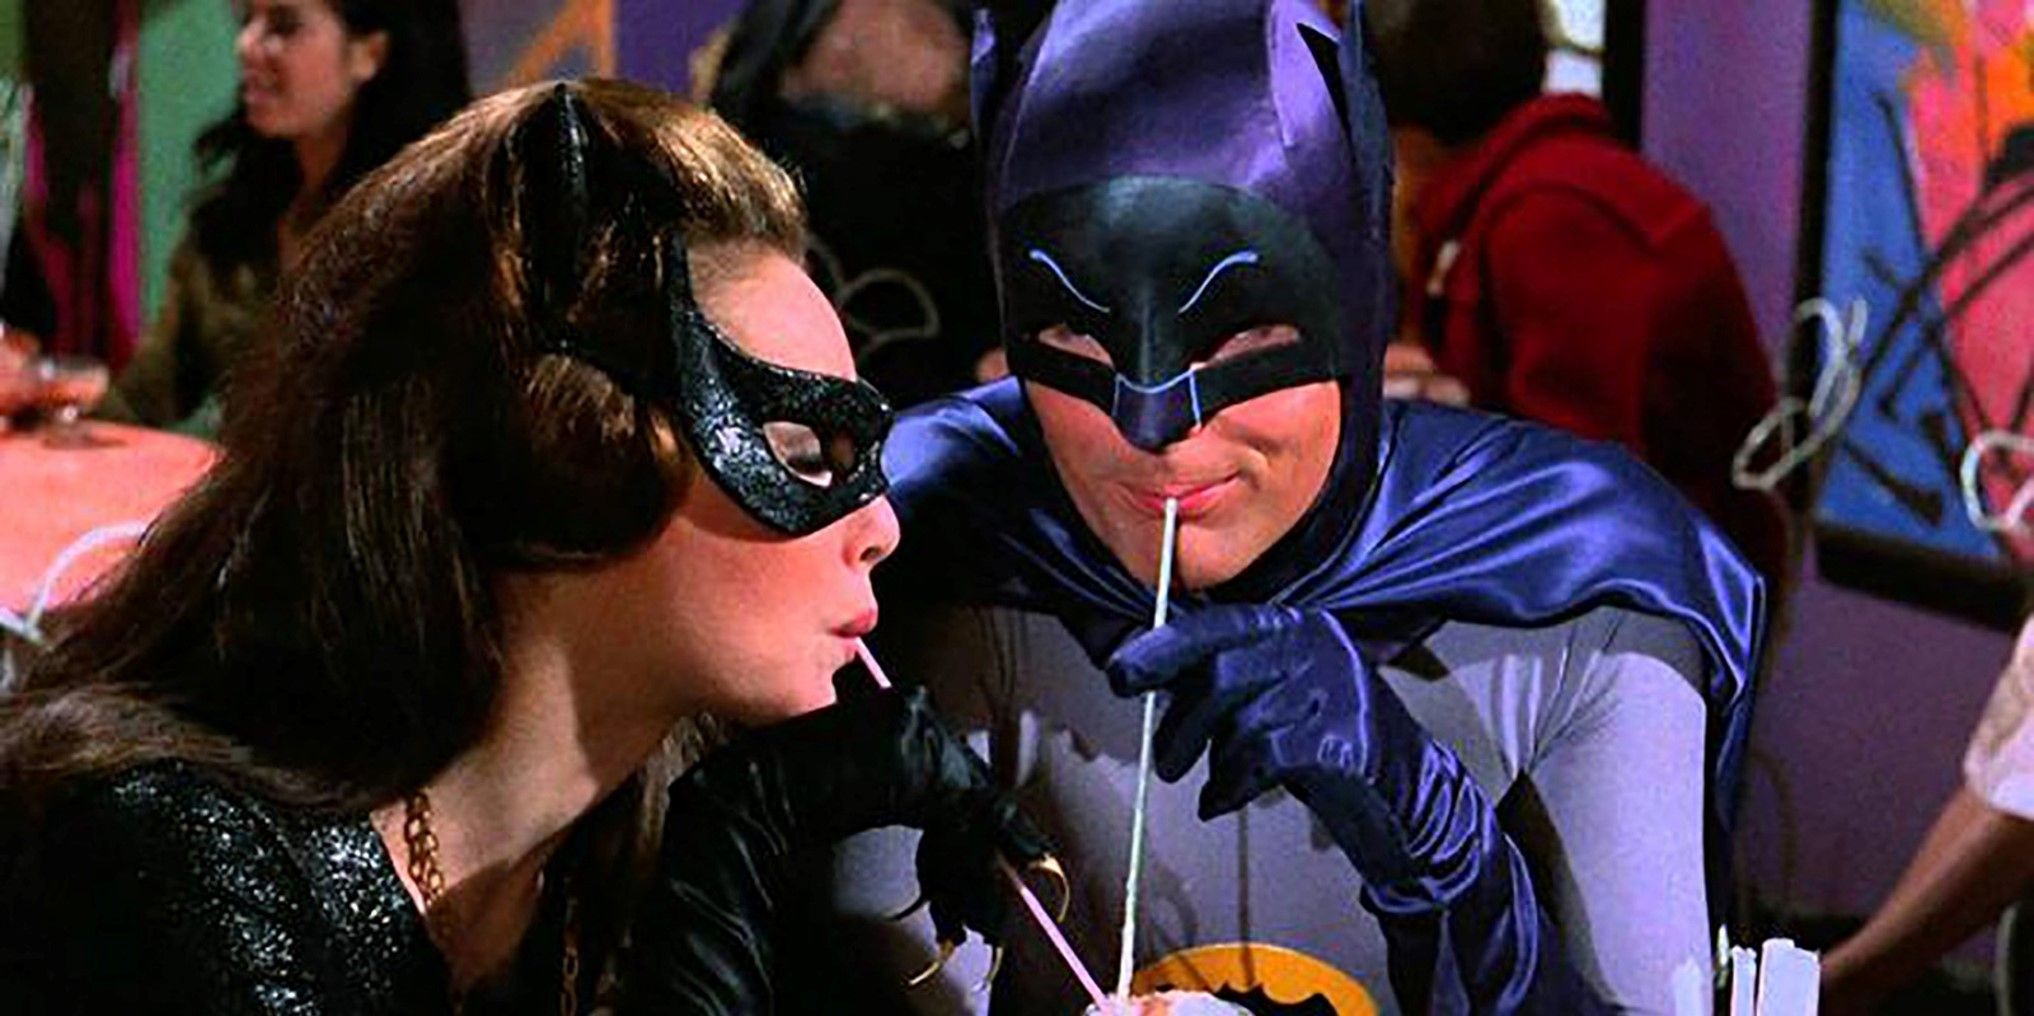 Adam West nei panni di Batman e Julie Newmar nei panni di Catwoman mentre condividono un milkshake